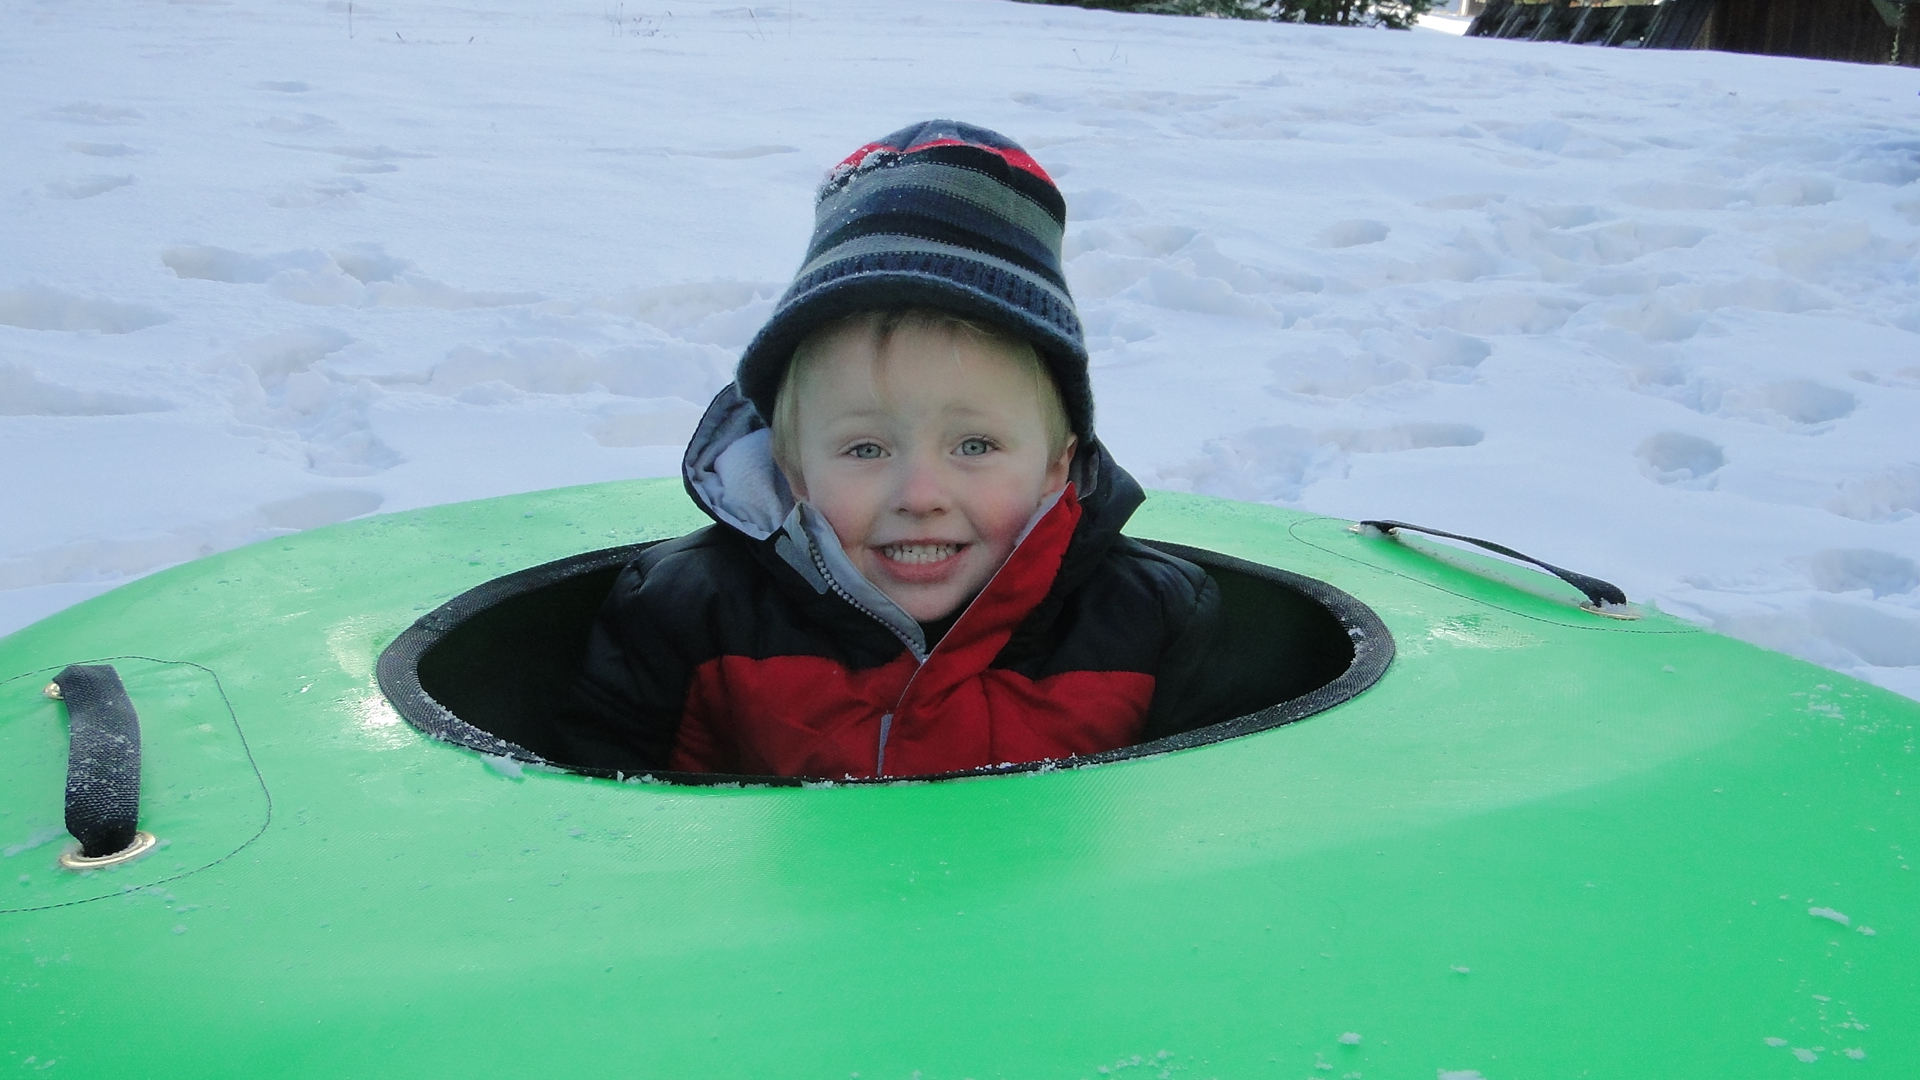 Kiddie Carousel at Skibowl's Snow Tube & Adventure Park